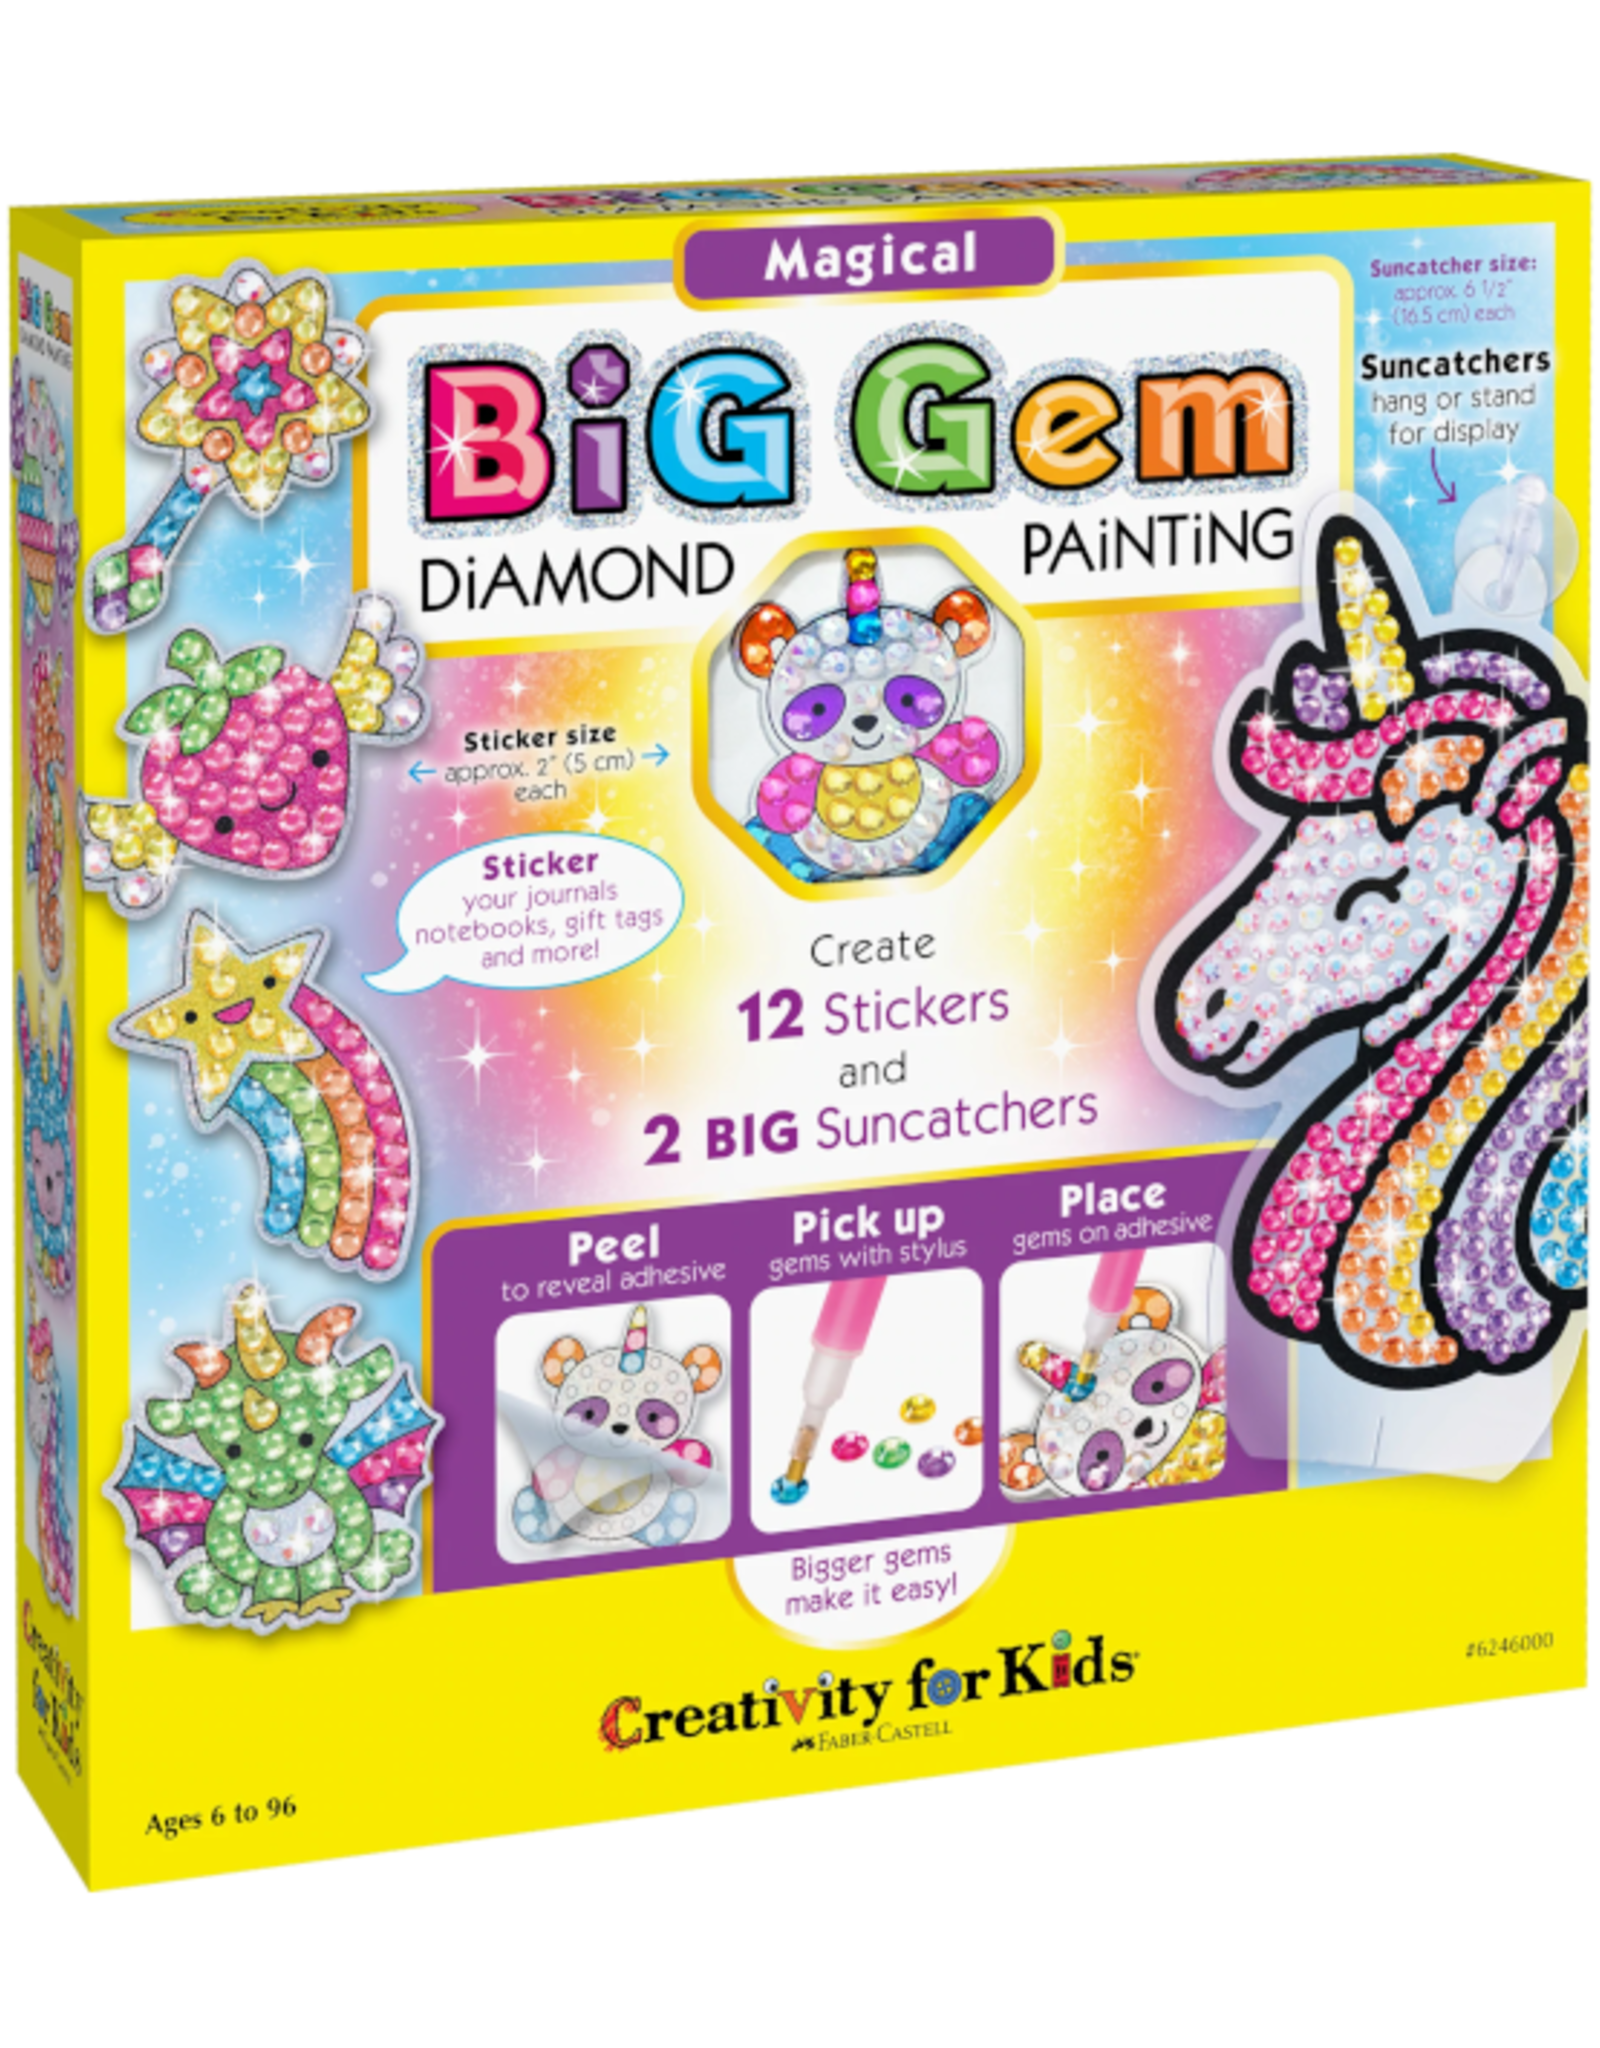 Creativity for Kids Creativity for Kids - Big Gem Diamond Painting - Magical